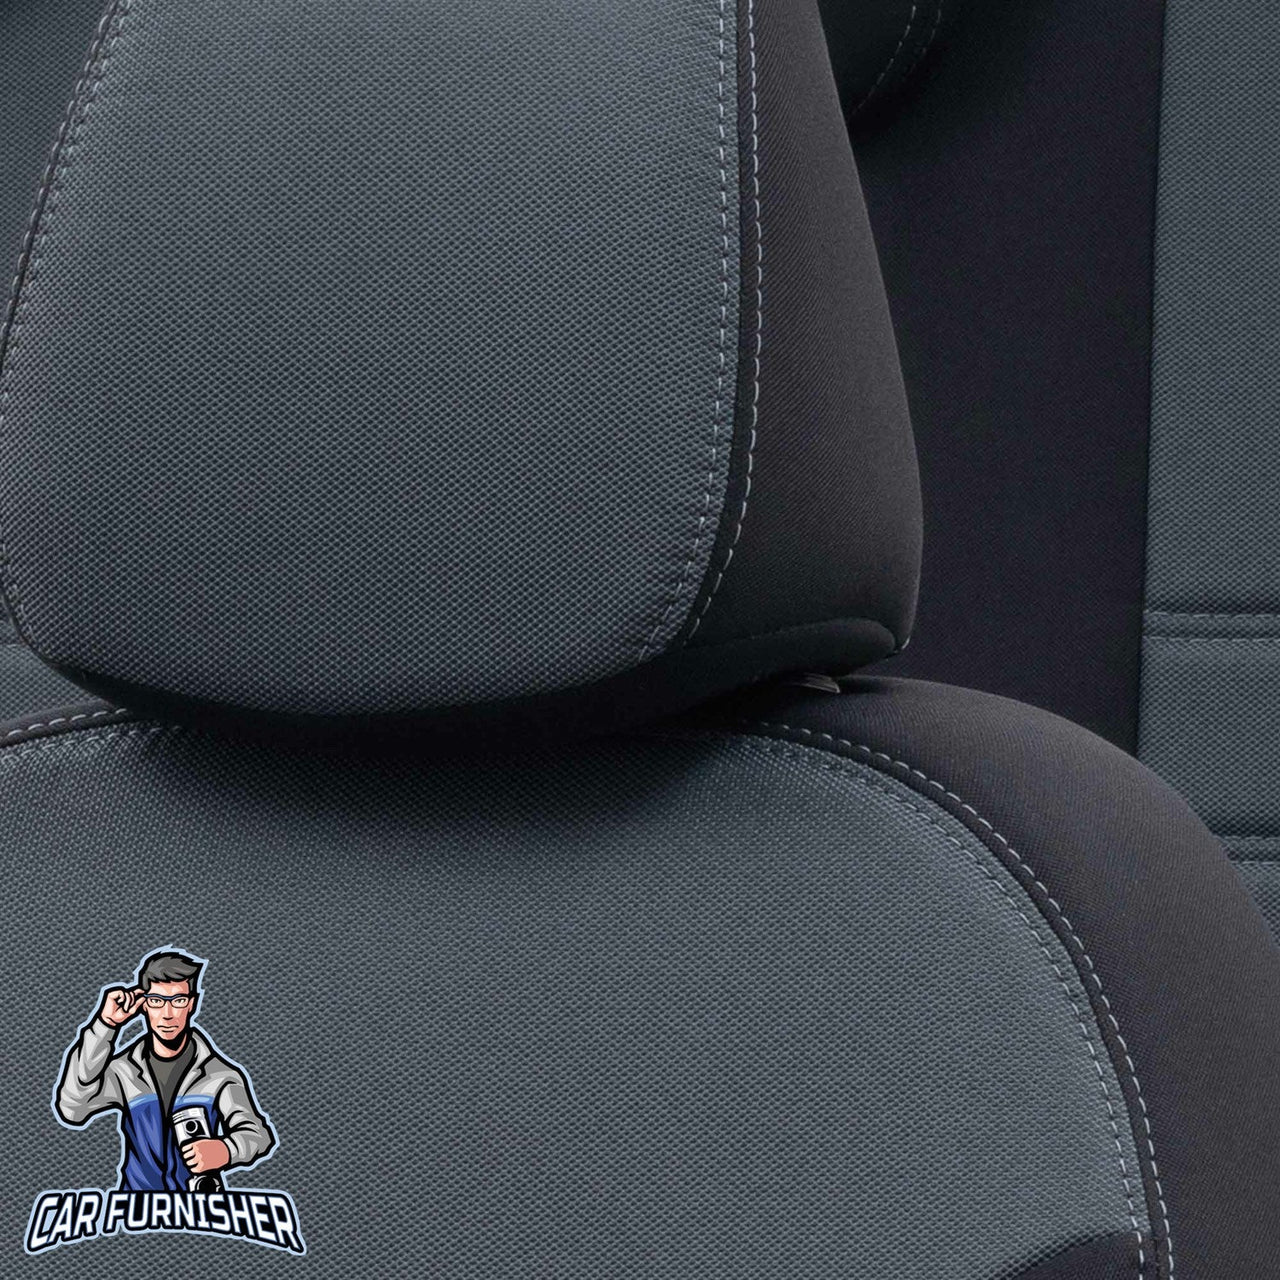 Nissan Primera Seat Covers Original Jacquard Design Smoked Black Jacquard Fabric